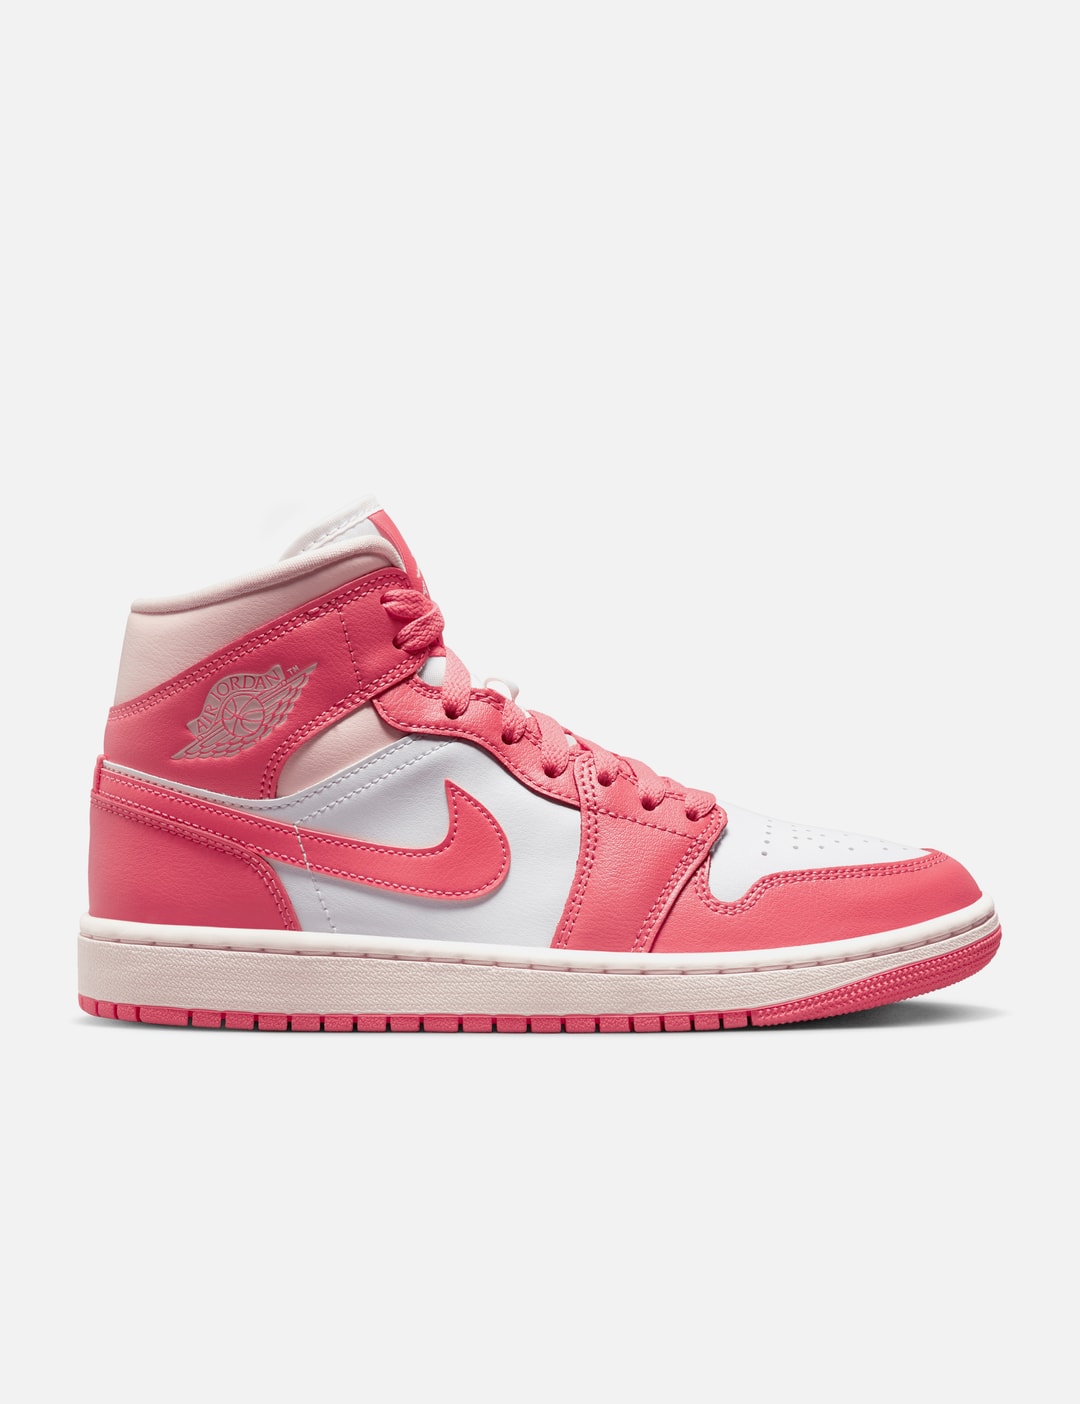 Louis Vuitton LV Pink Nike Air Jordan 1 Shoes Sneakers - Shop